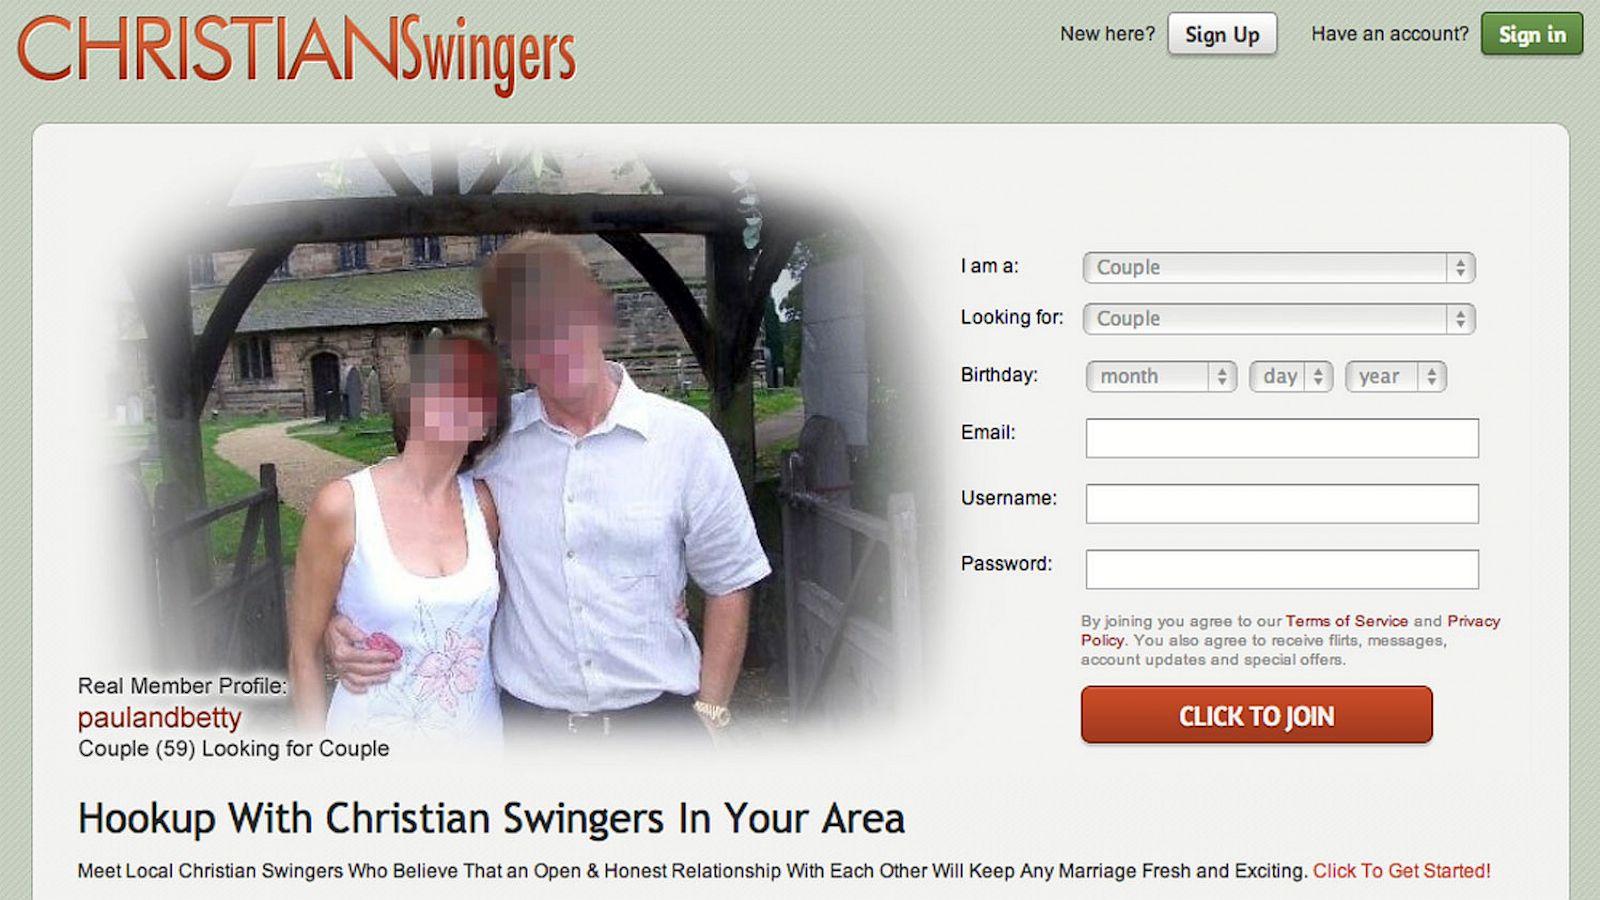 Christian Swingers? Even Progressive Pastors Are Shocked image